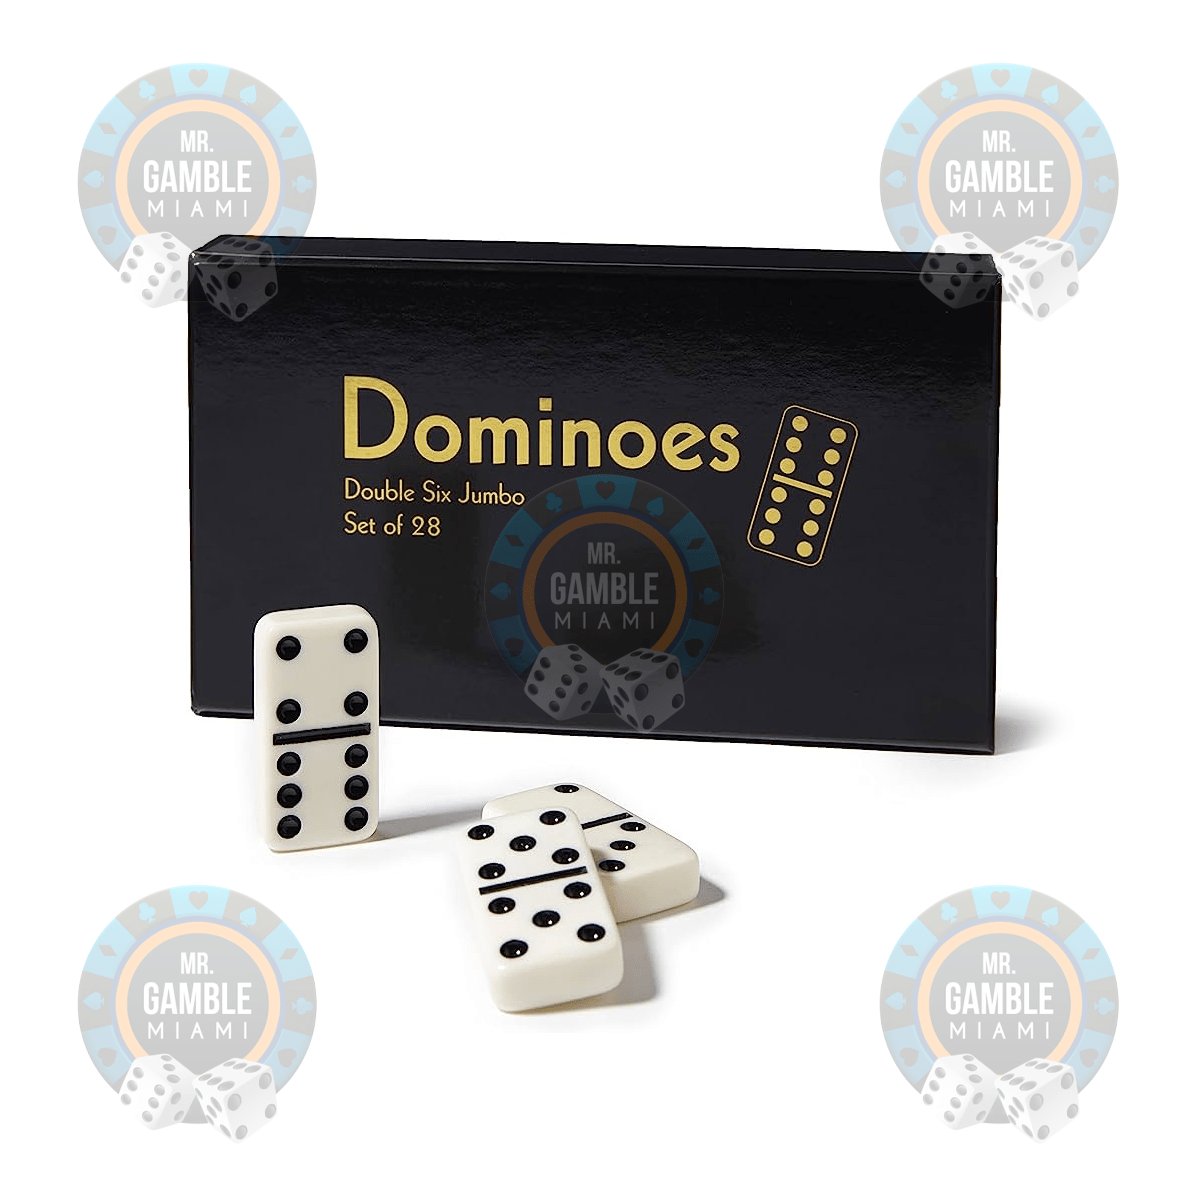 UV poker cheating device - poker UU marked dominoes